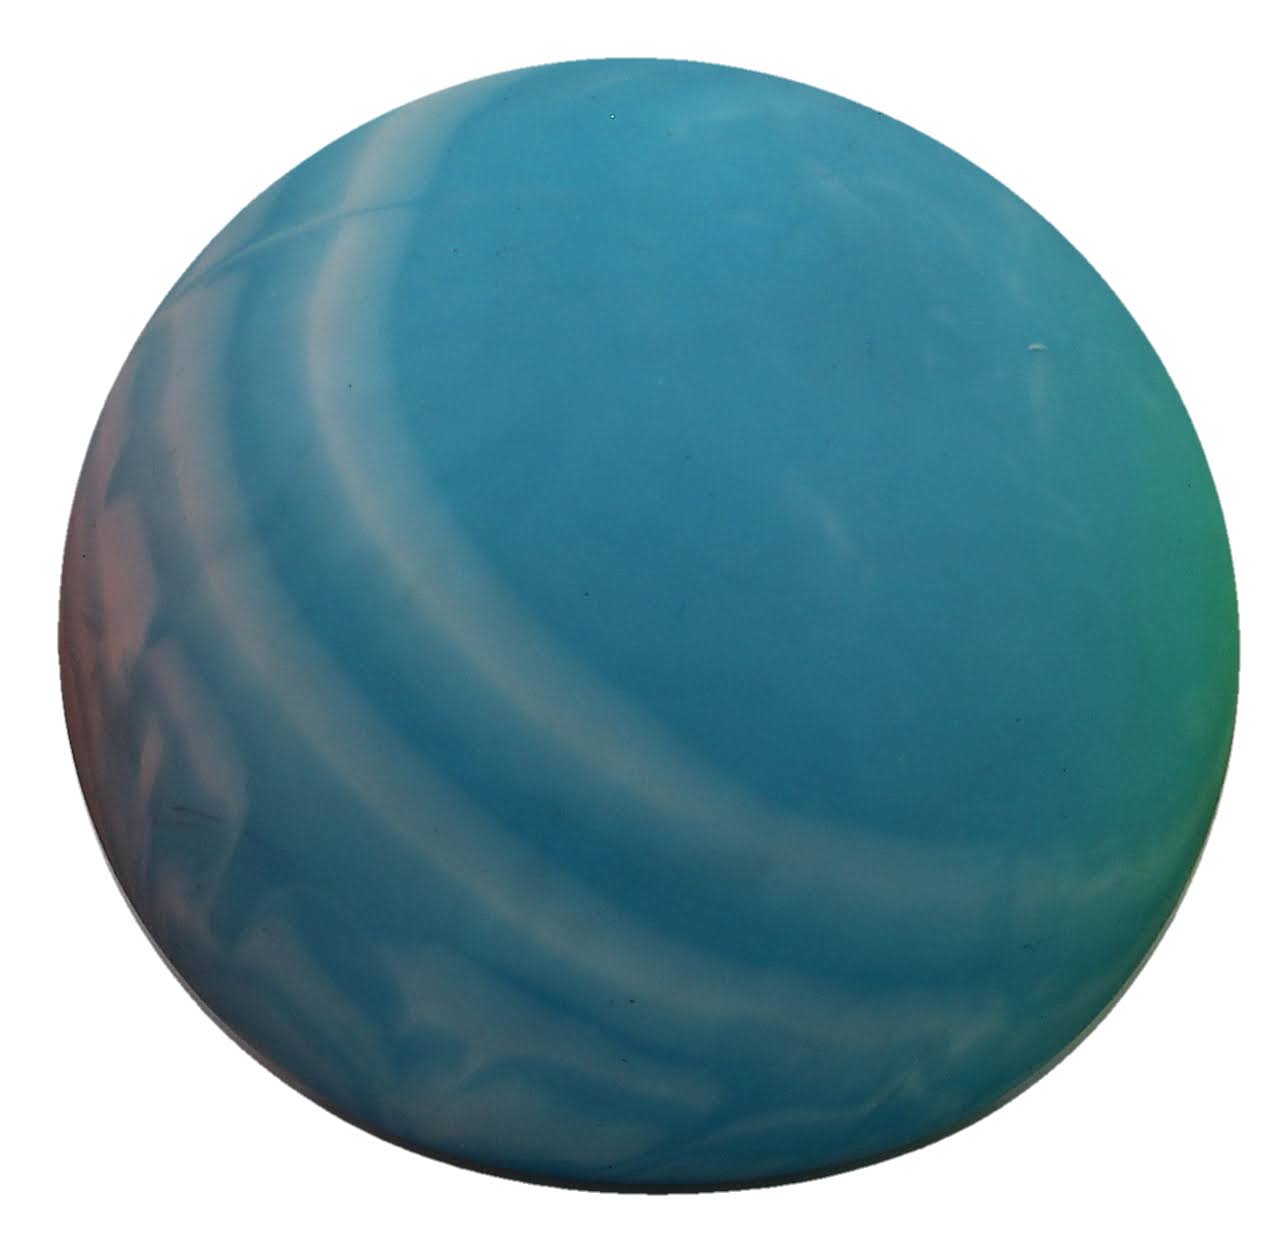 Keycraft Squishy Planet Stress Ball 6cm Blue